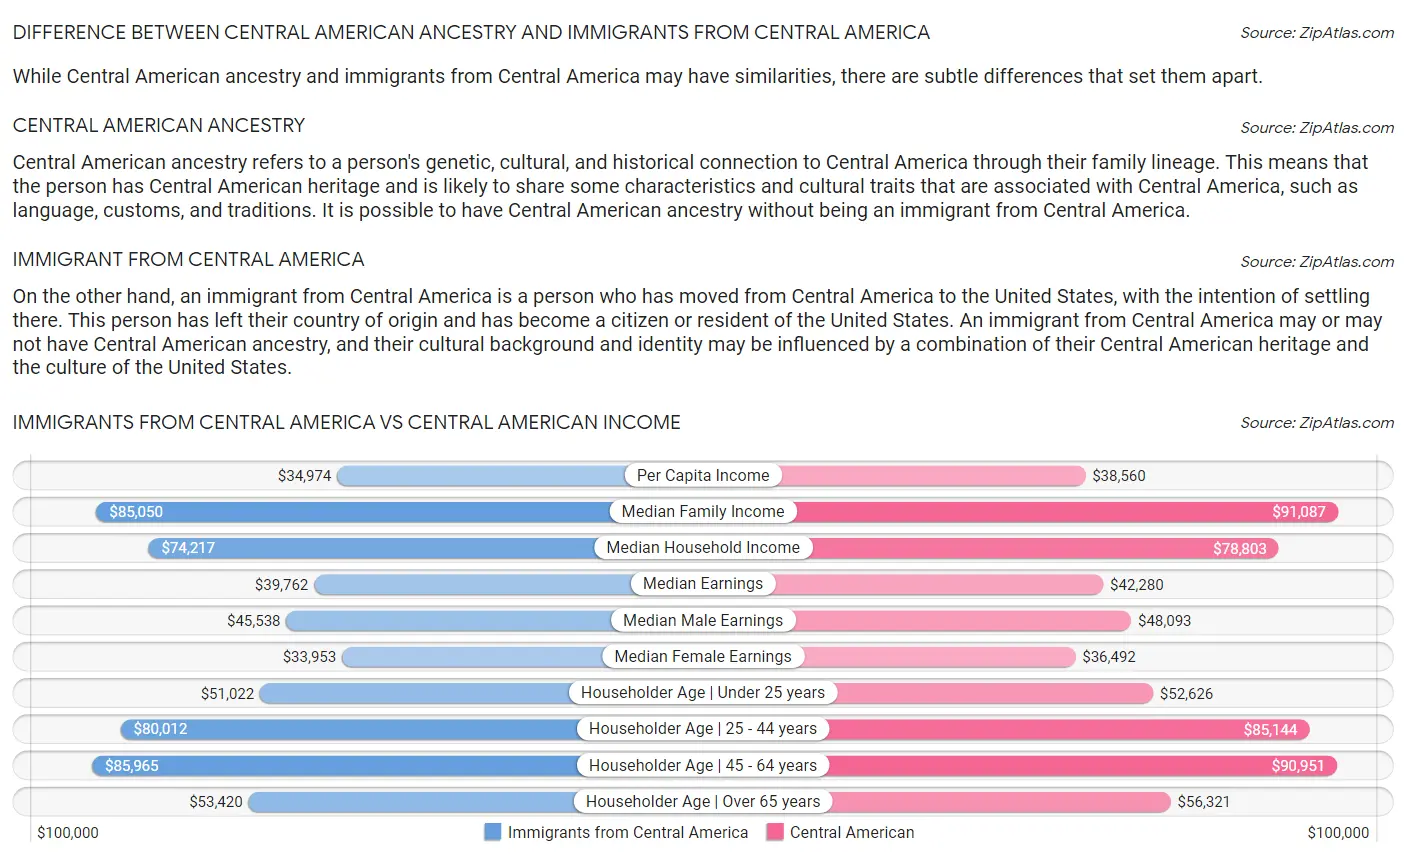 Immigrants from Central America vs Central American Income